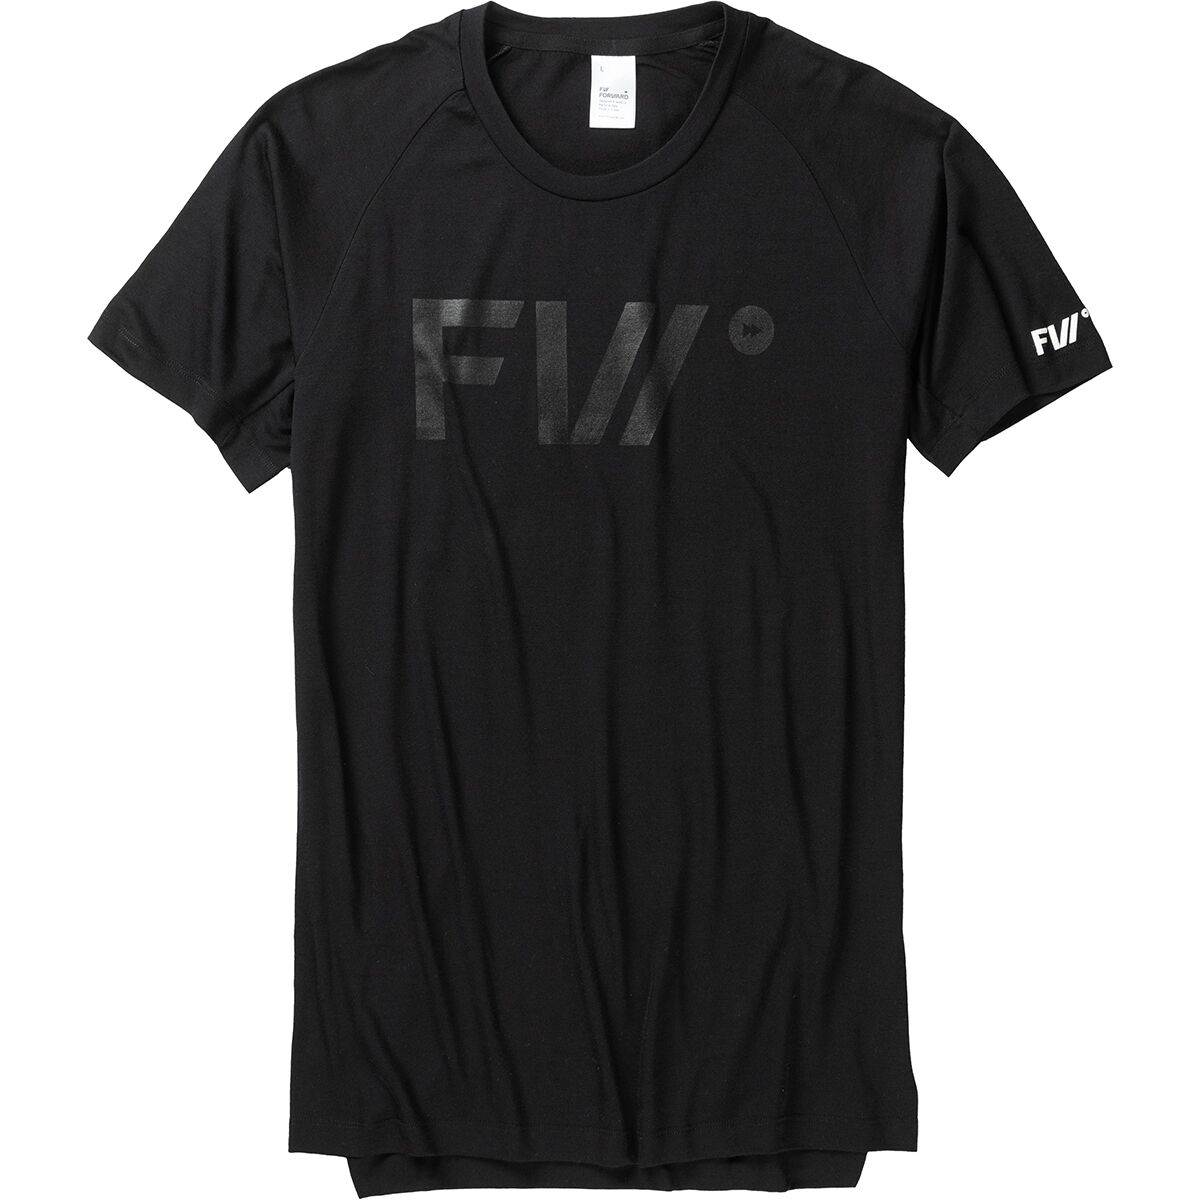 Fw apparel легкая футболка с короткими рукавами raw Fw Apparel, черный